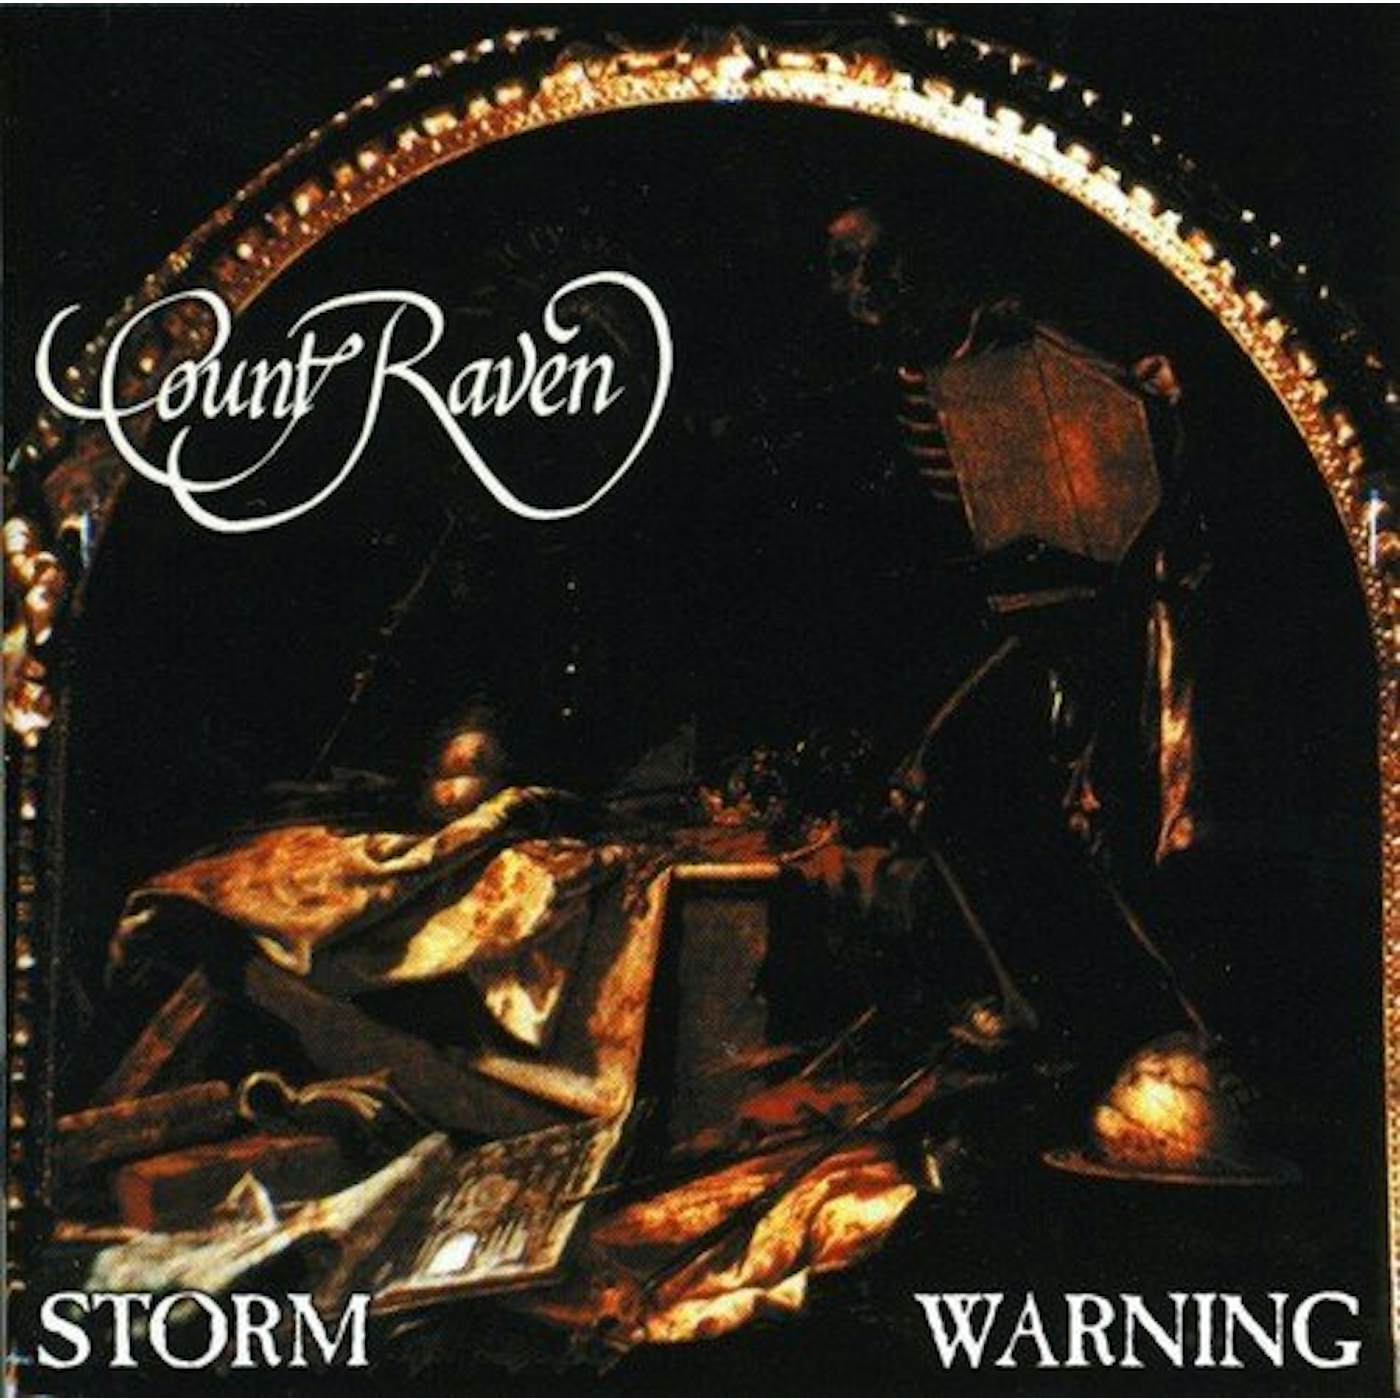 Count Raven Storm Warning Vinyl Record